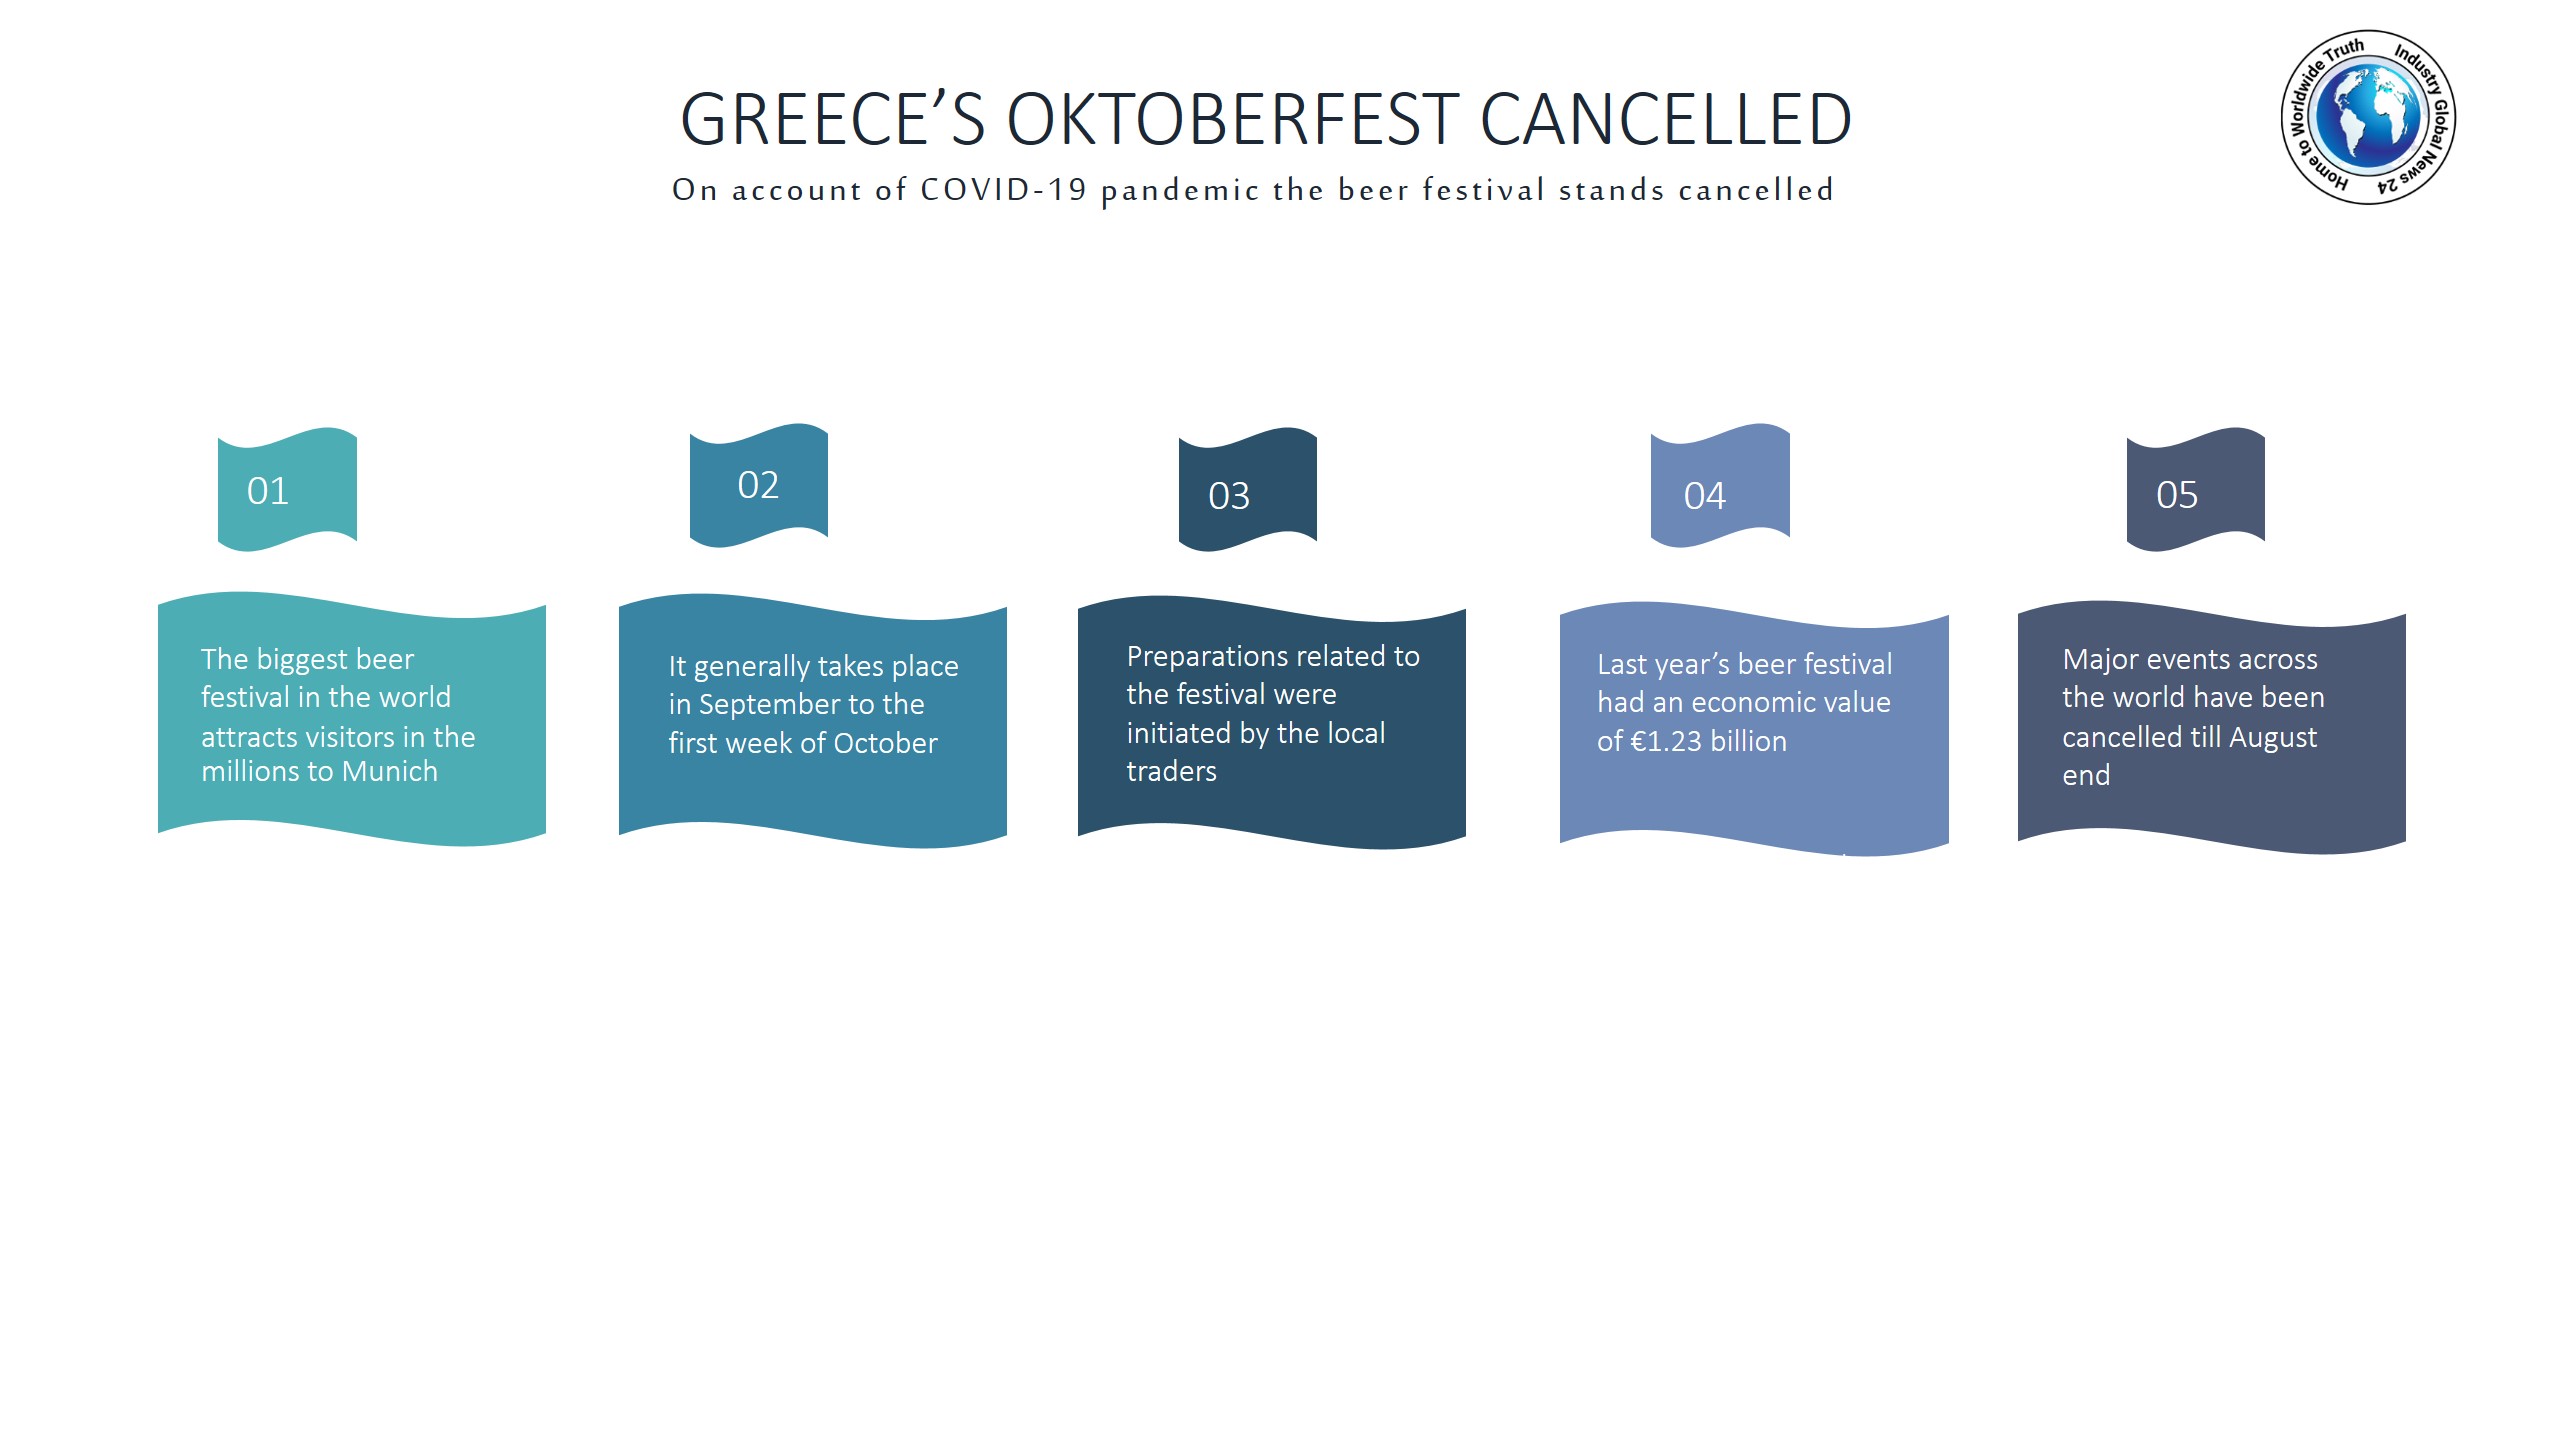 Greece’s Oktoberfest cancelled